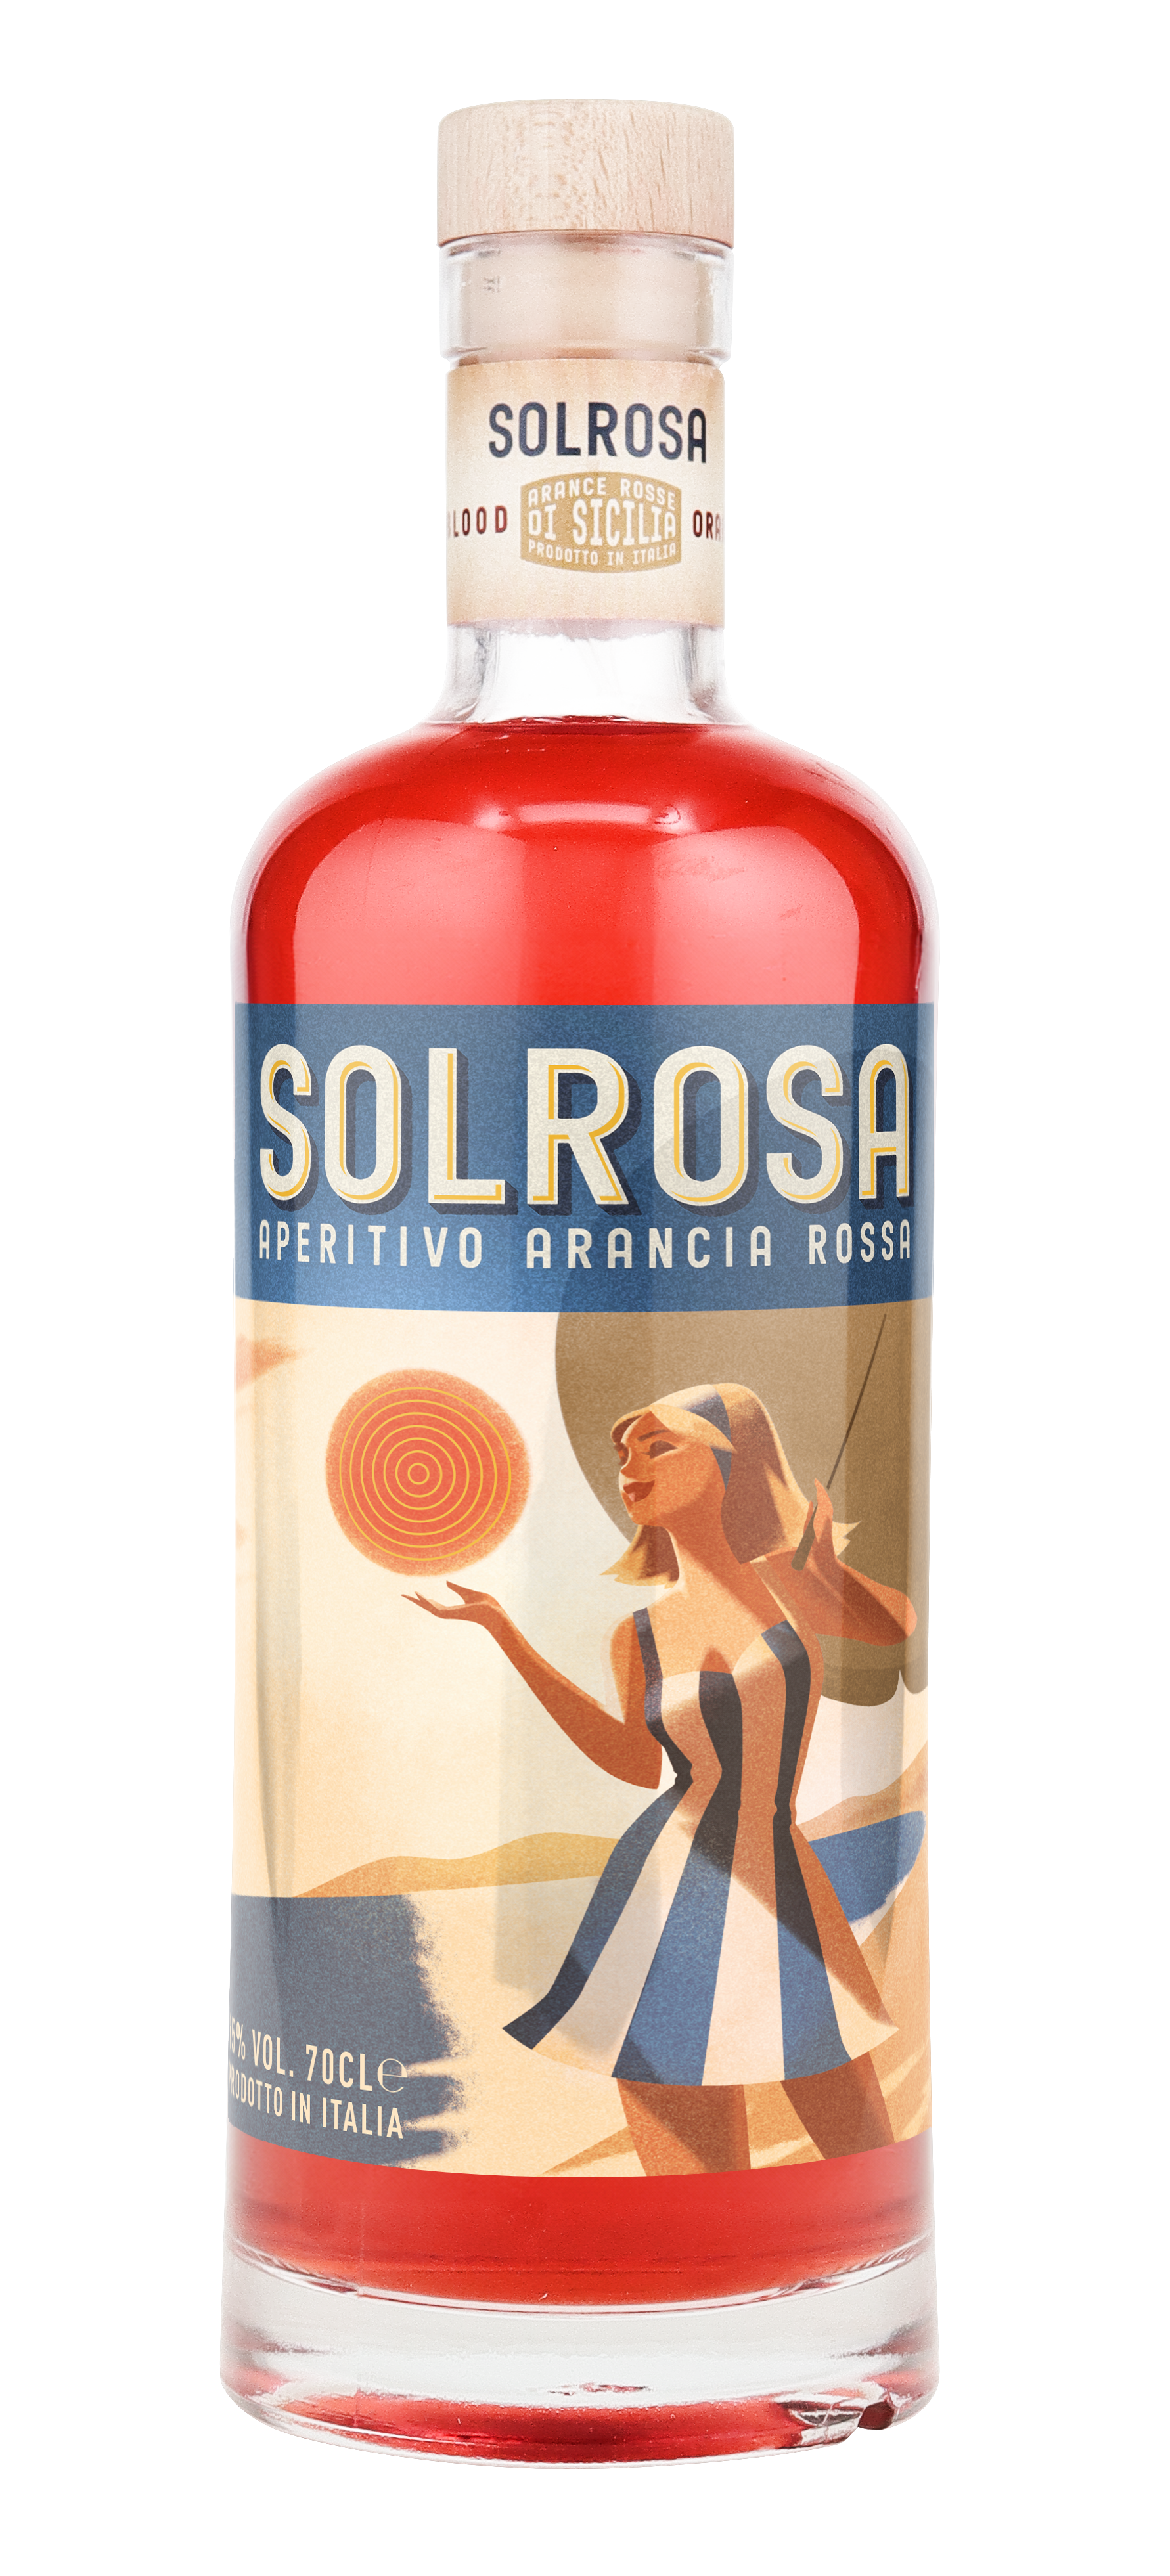 Solrosa Aperitivo Aranica Rossa - 0,7L 15% vol